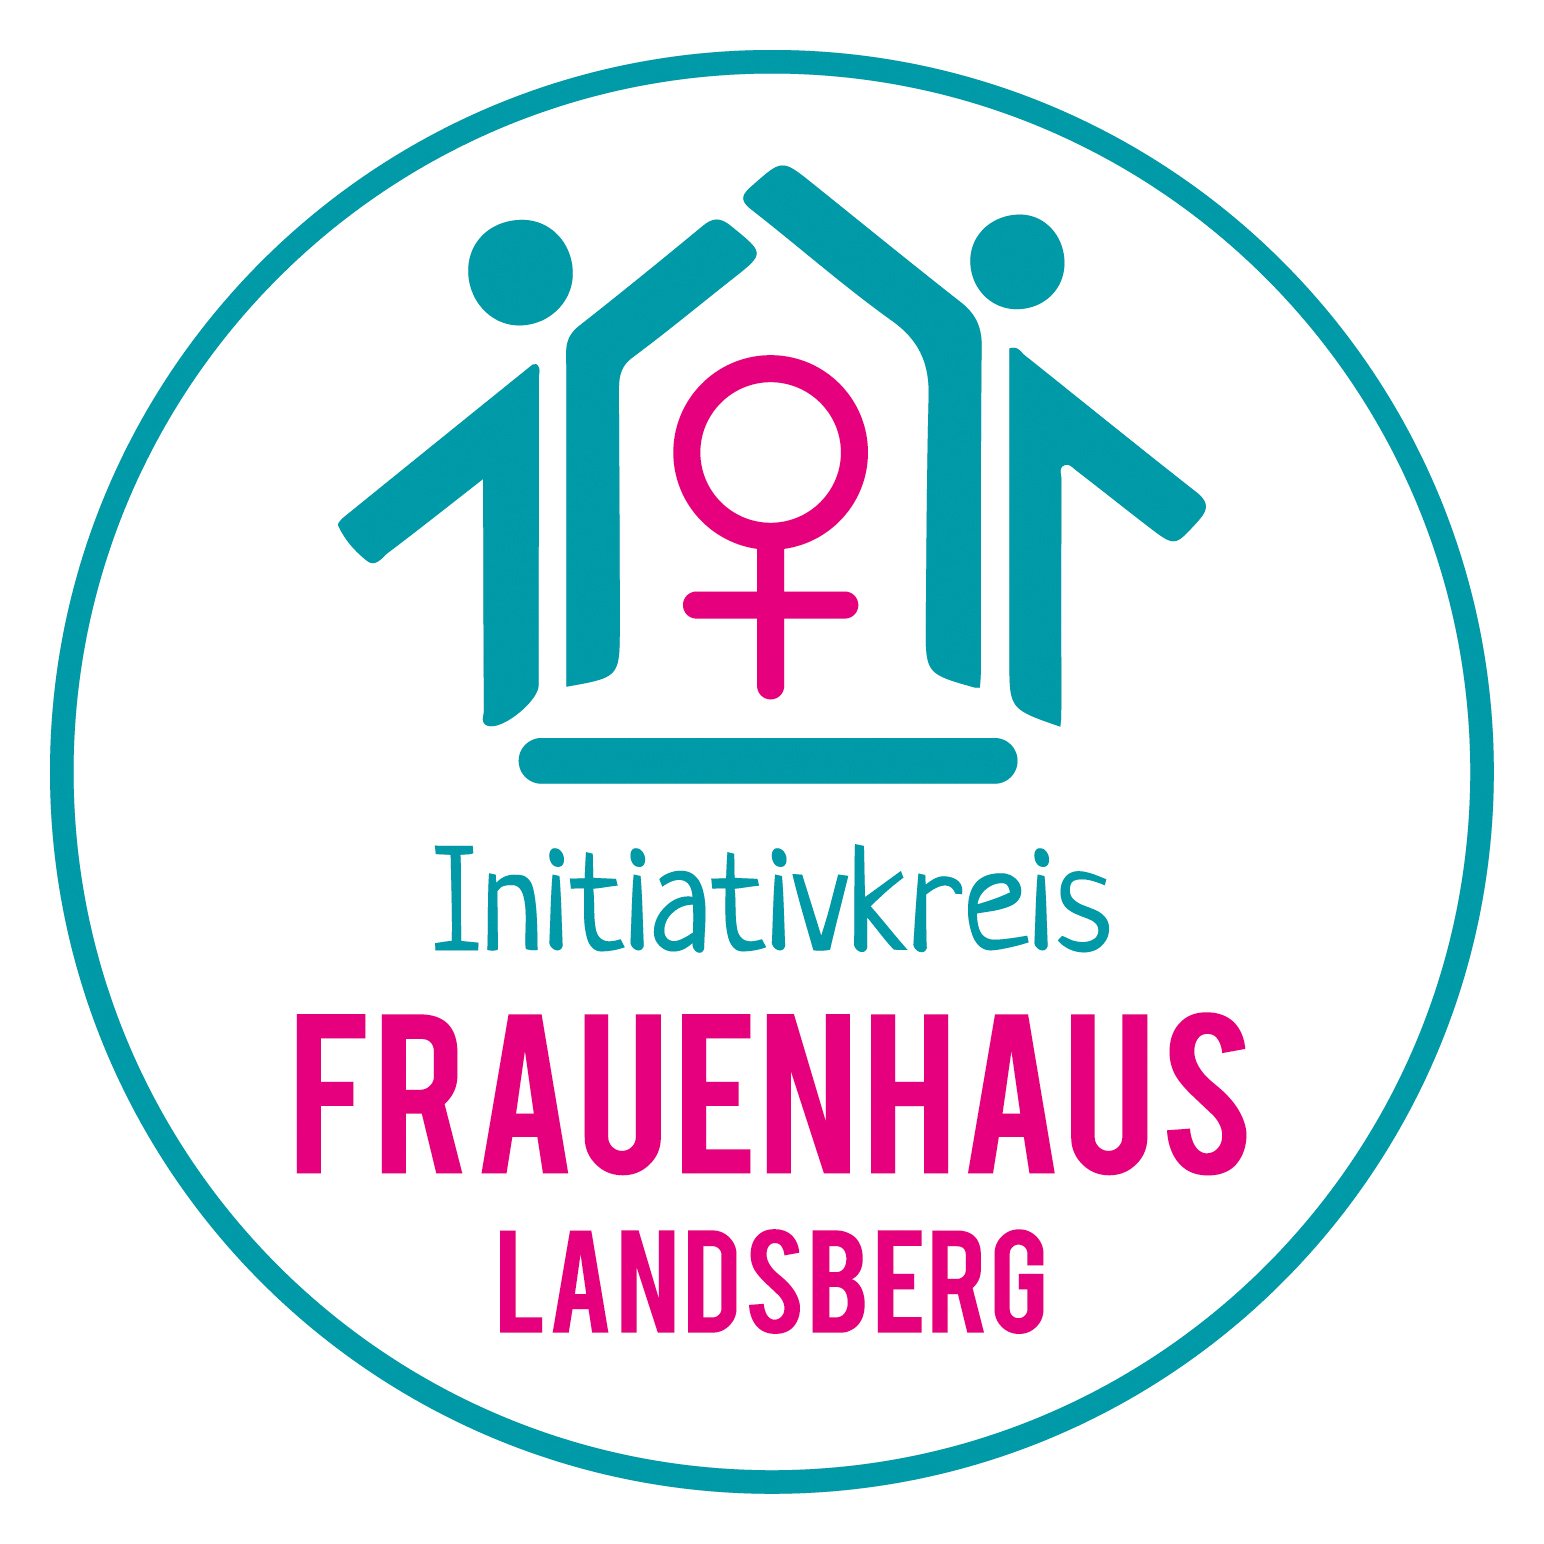 (c) Frauenhaus-landsberg.de